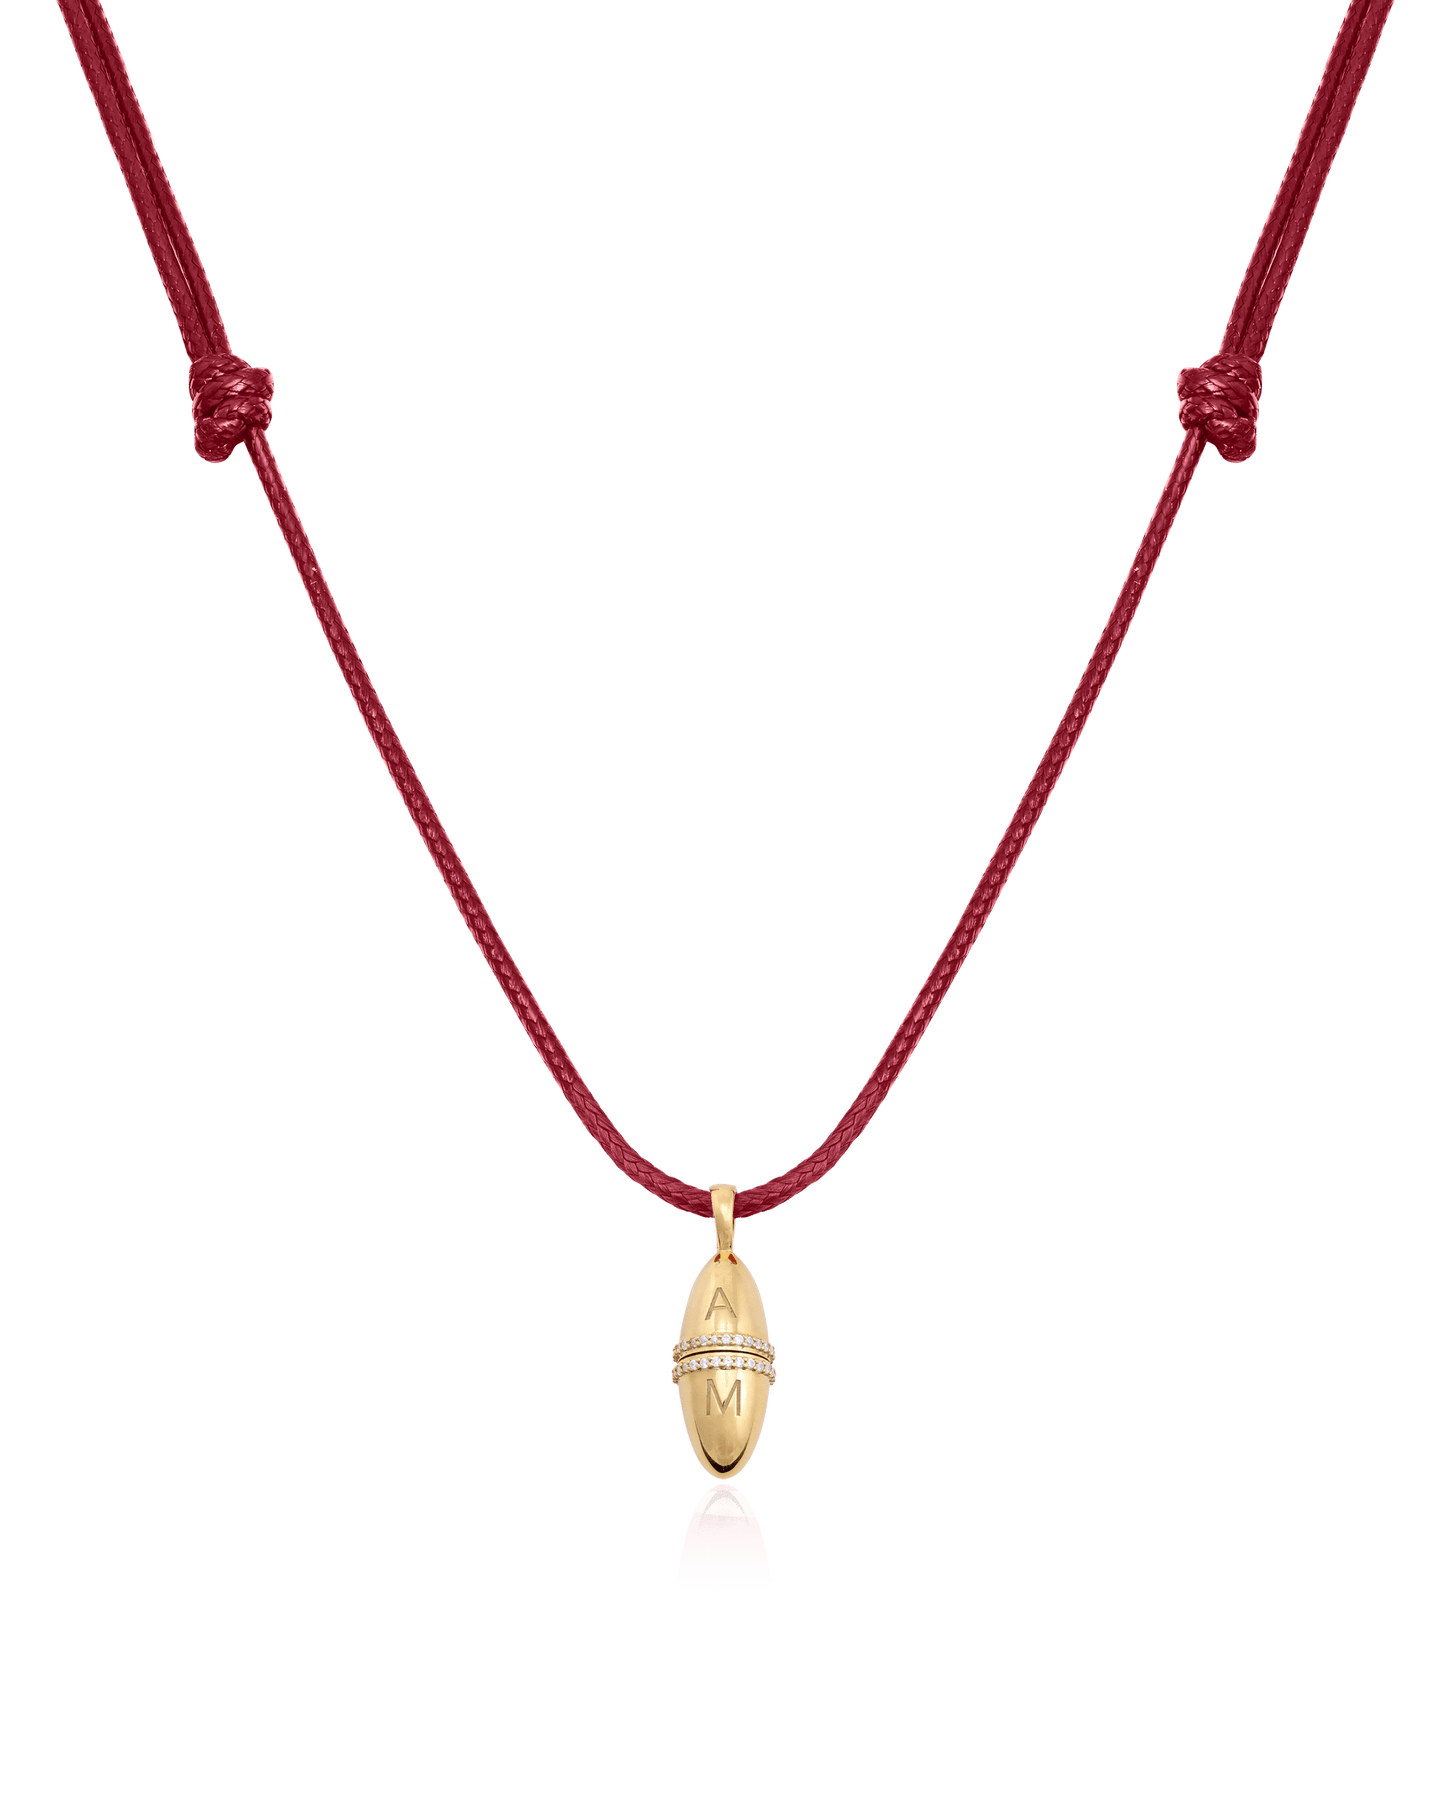 Fabergé Cord Necklace - 18K Gold Vermeil Necklaces magal-dev Red Adjustable Leather Cord 20"-24" 